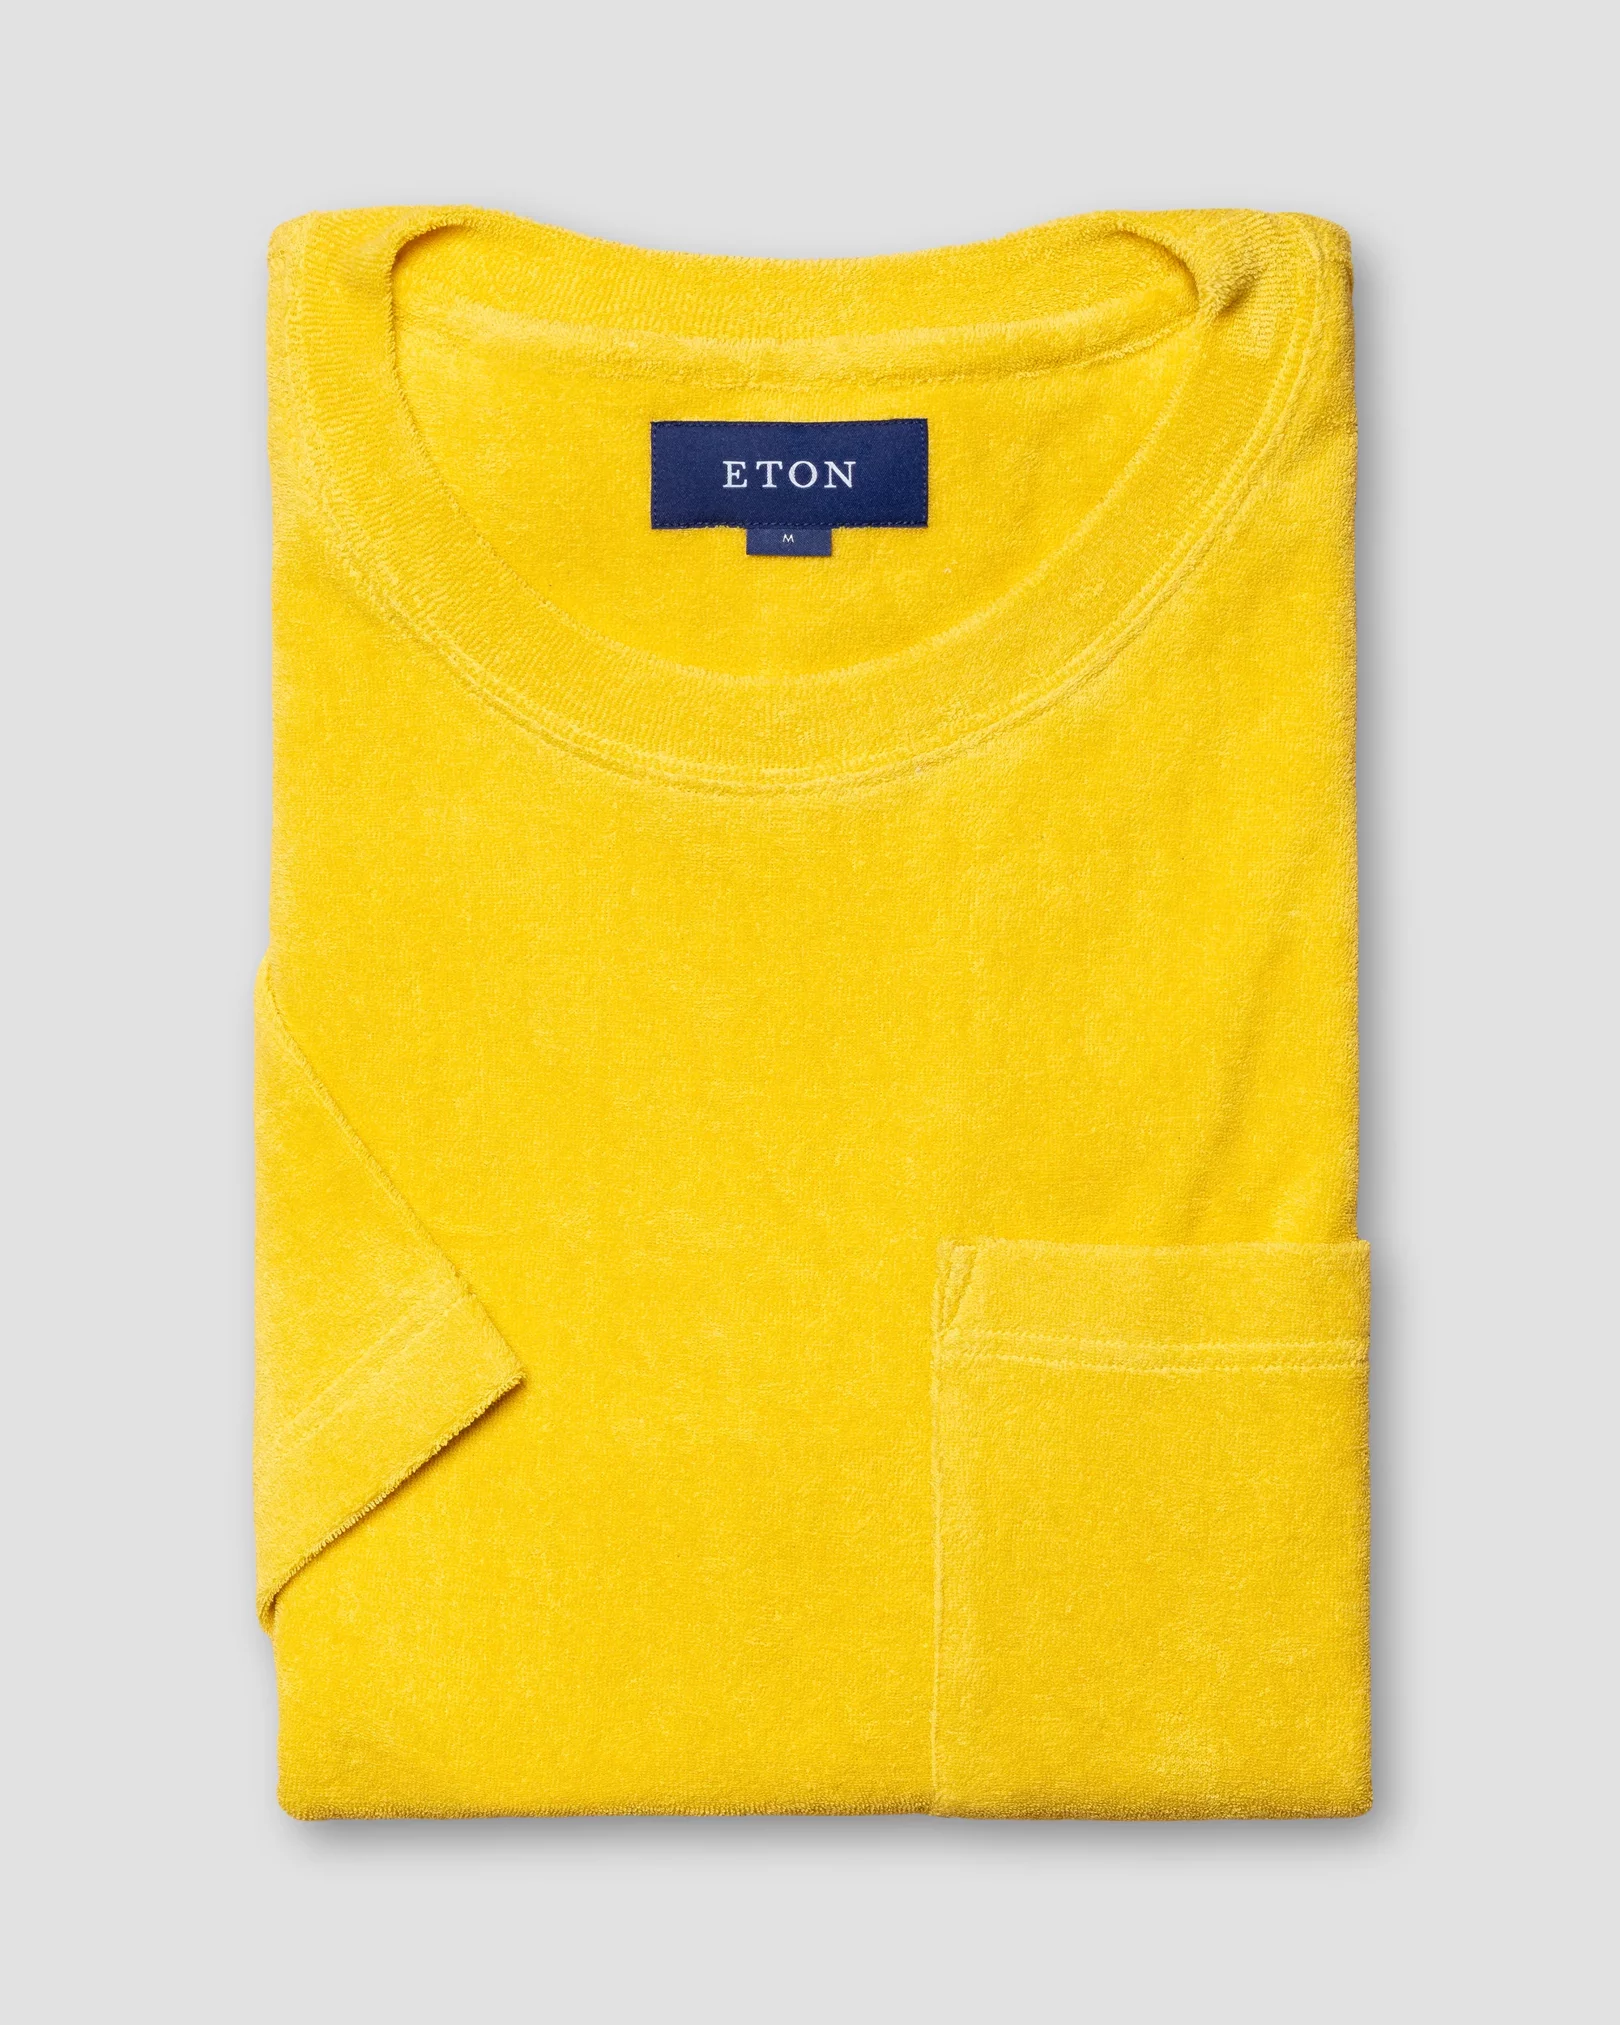 Eton - yellow jerseyterryfrotte